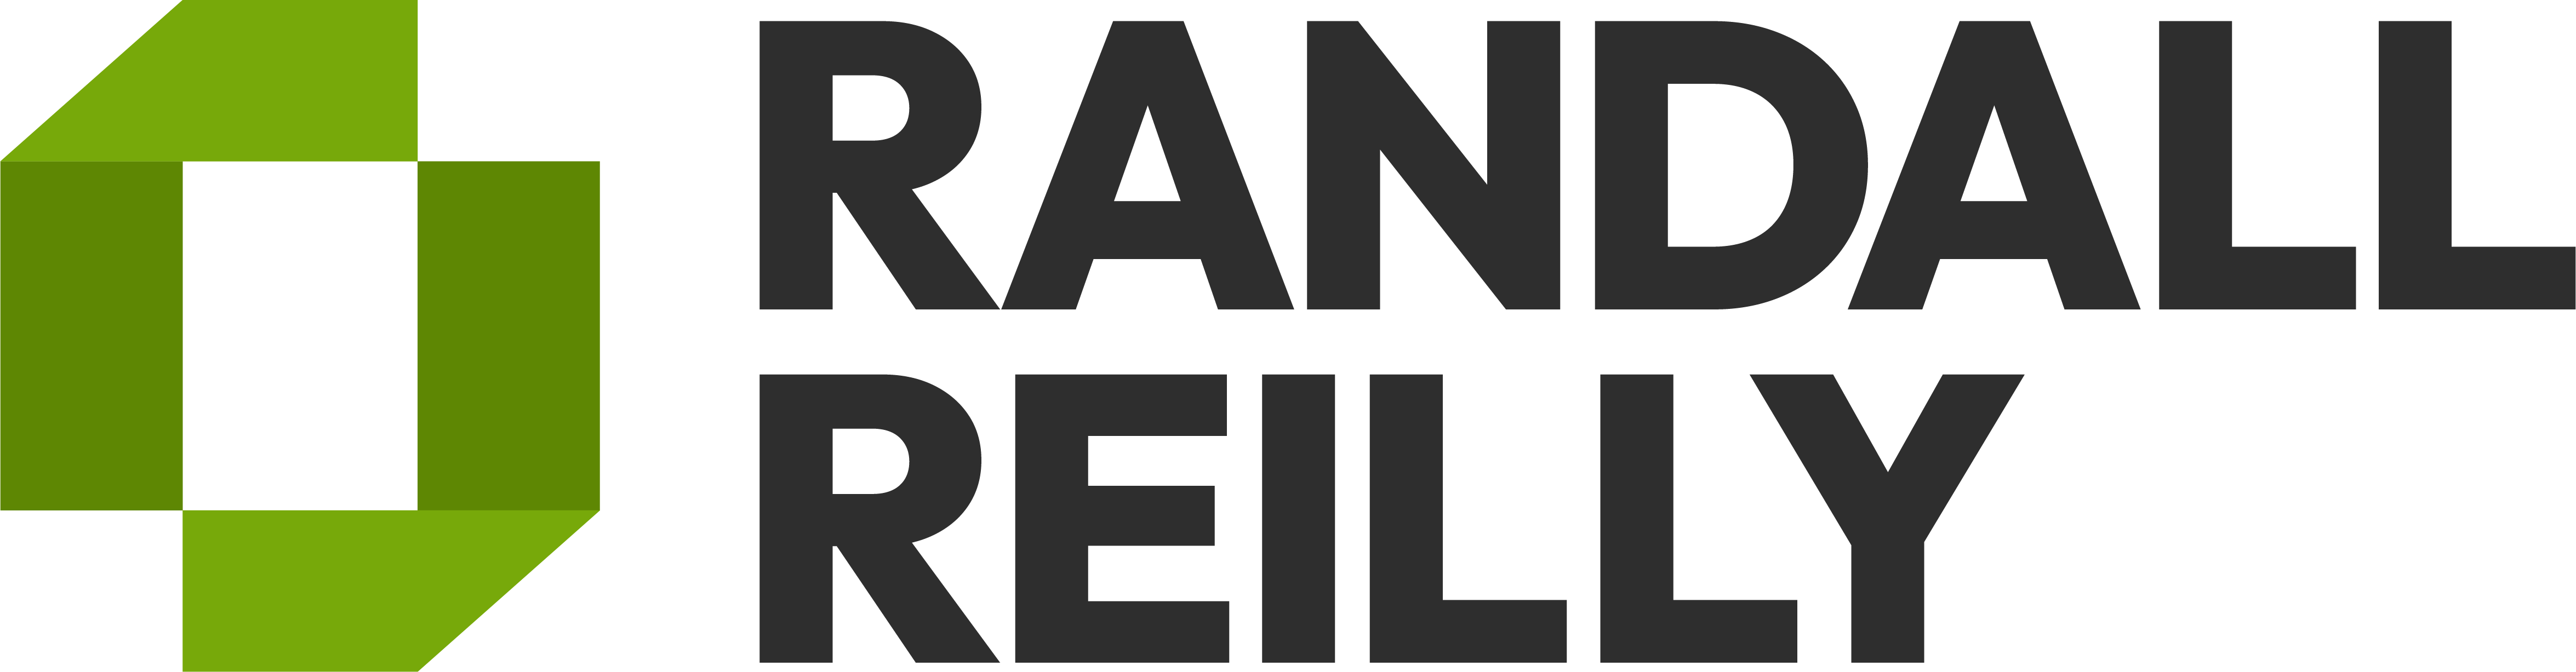 Randall Reilly Logo